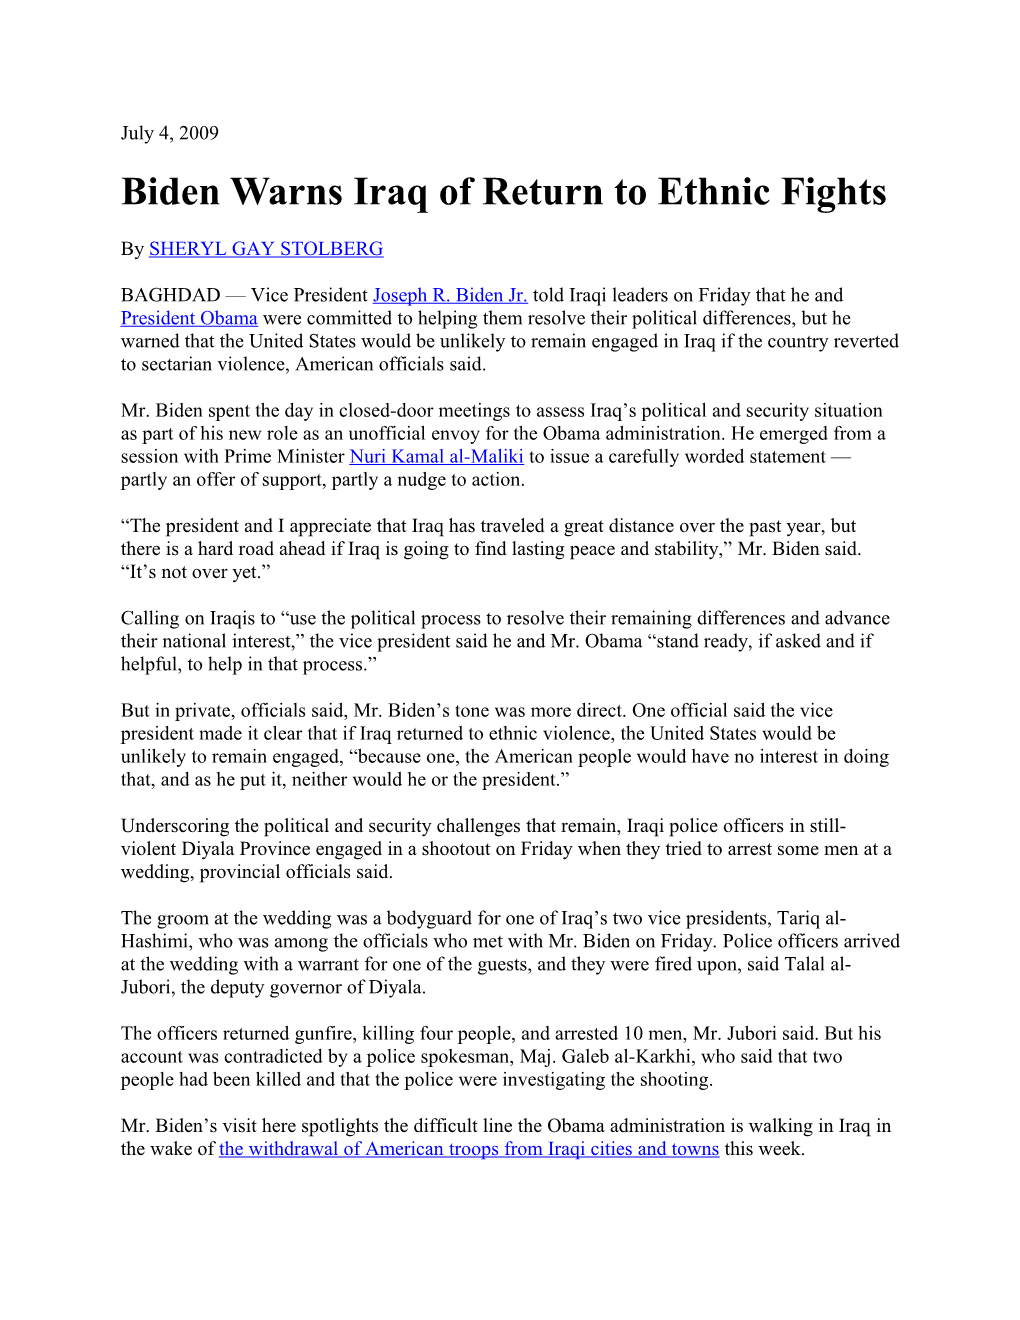 Biden Warns Iraq of Return to Ethnic Fights